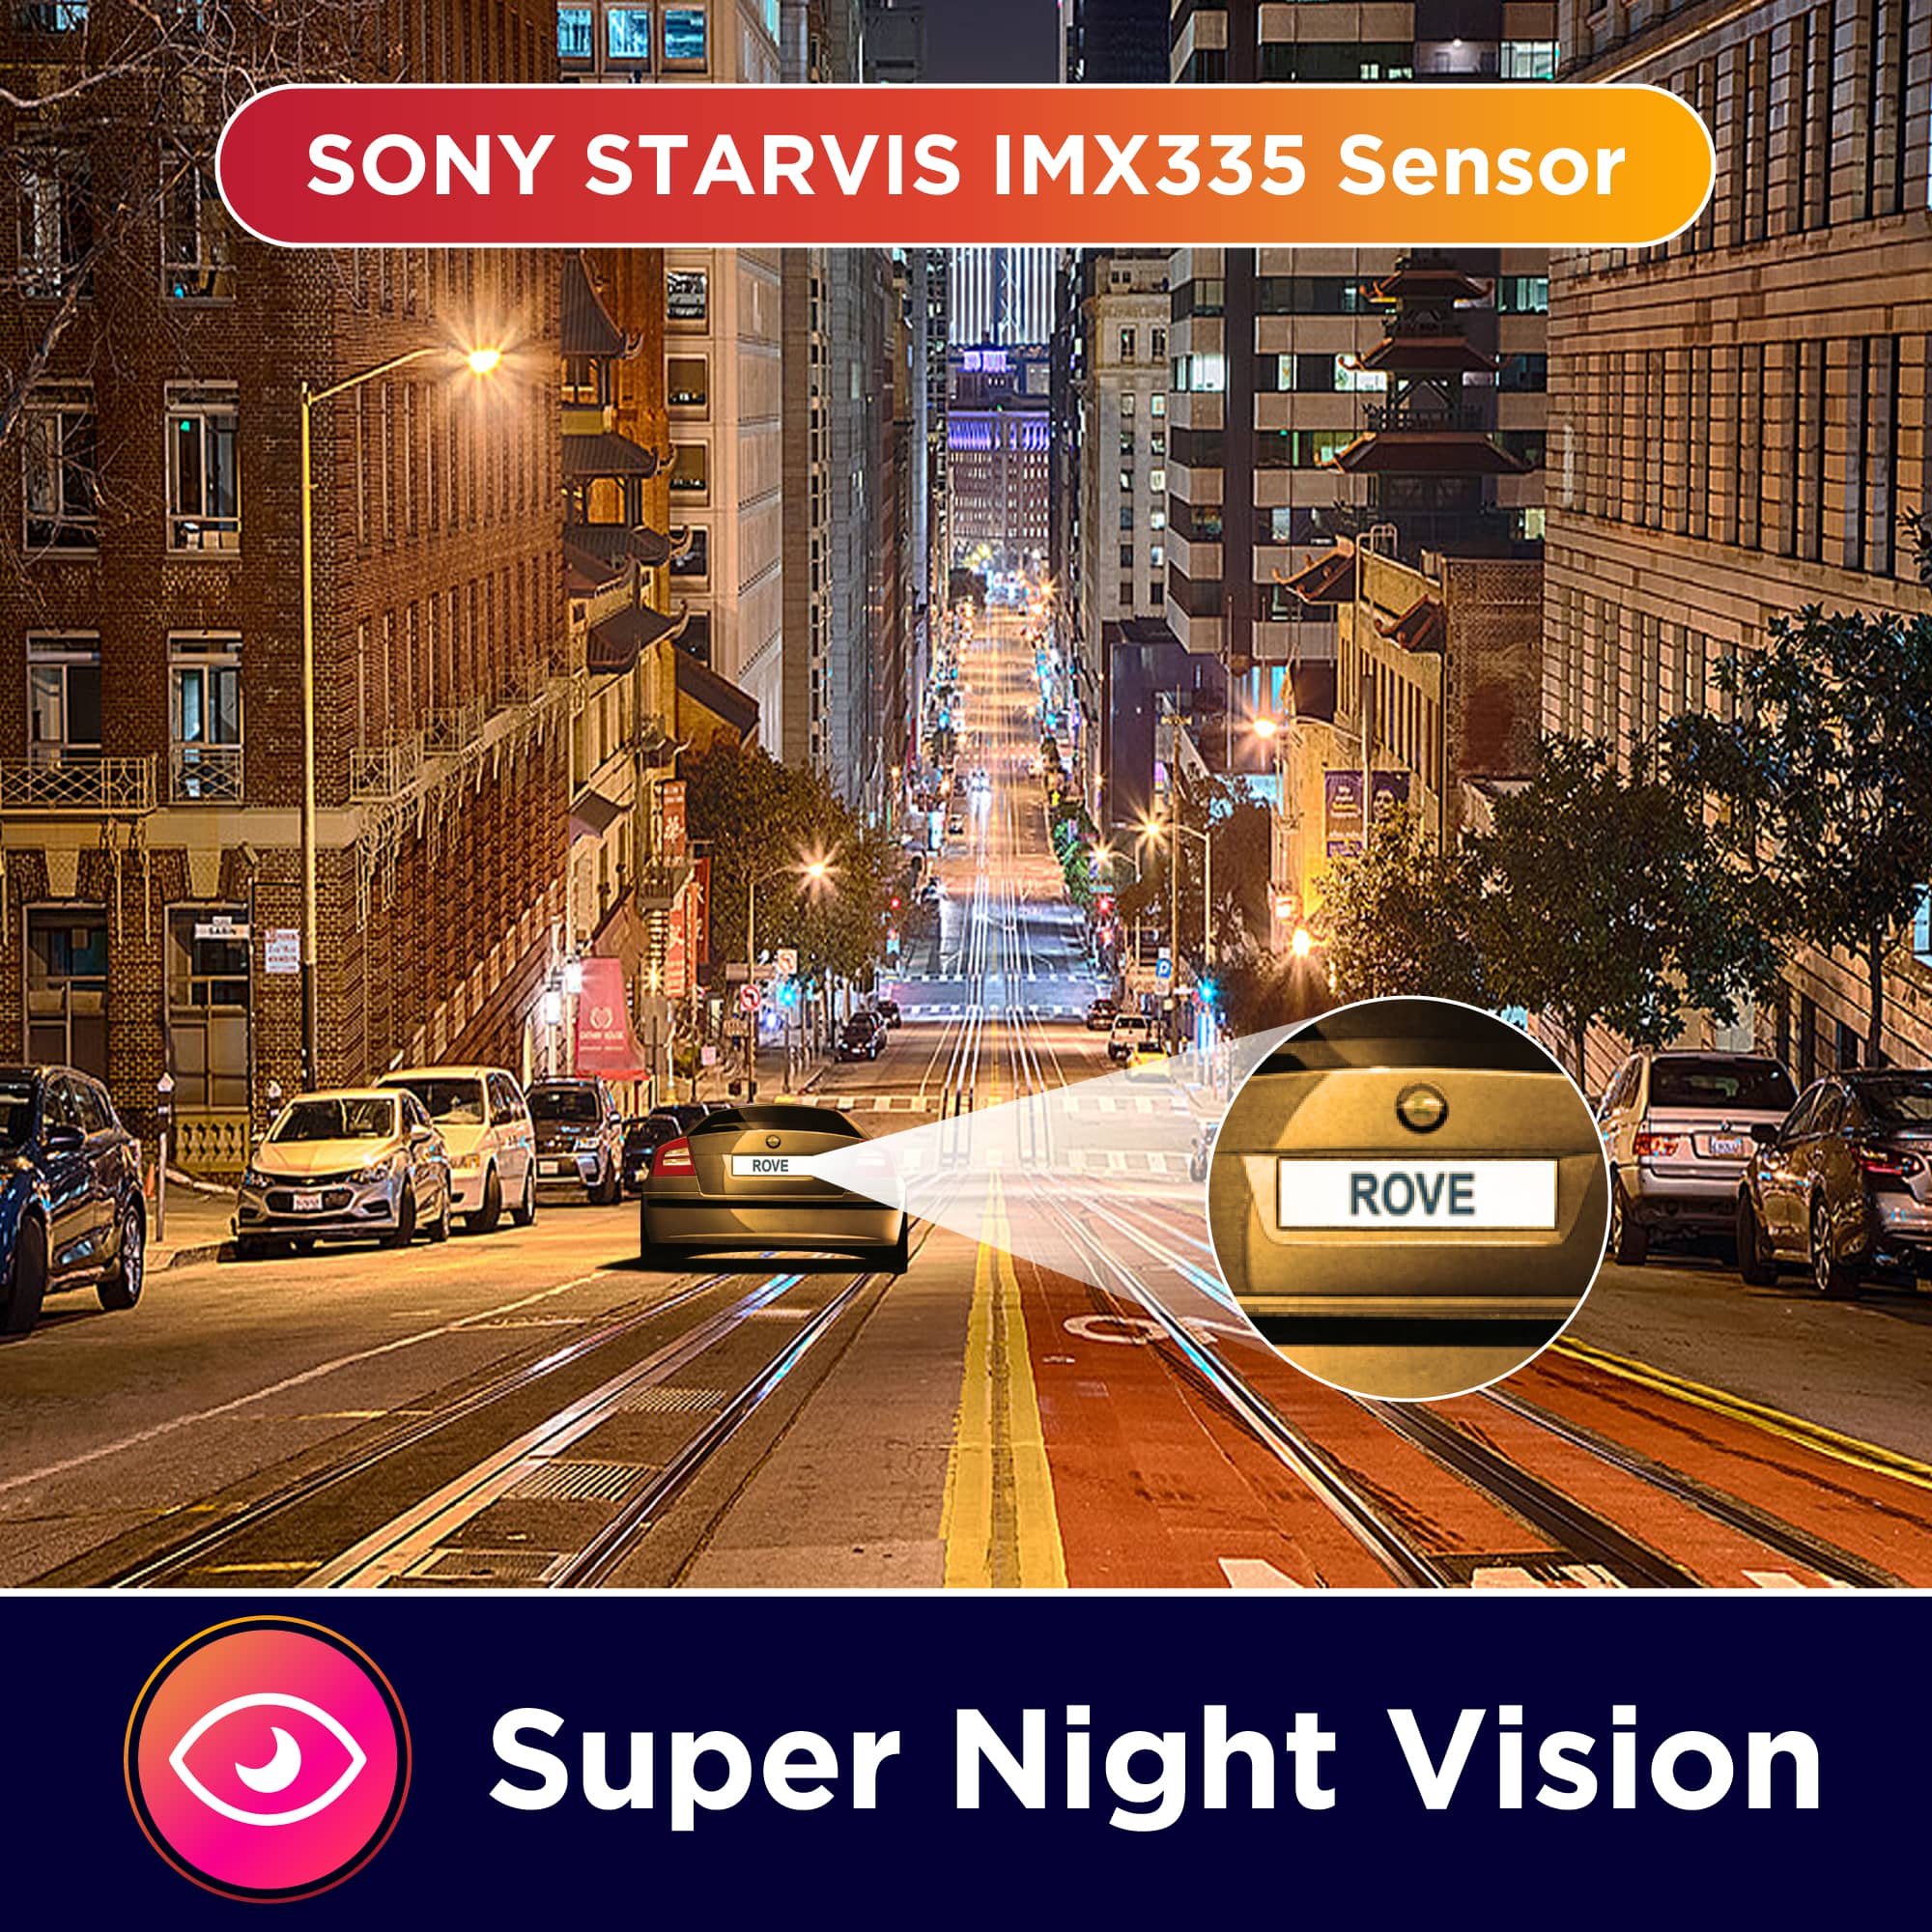 Super Night Vision